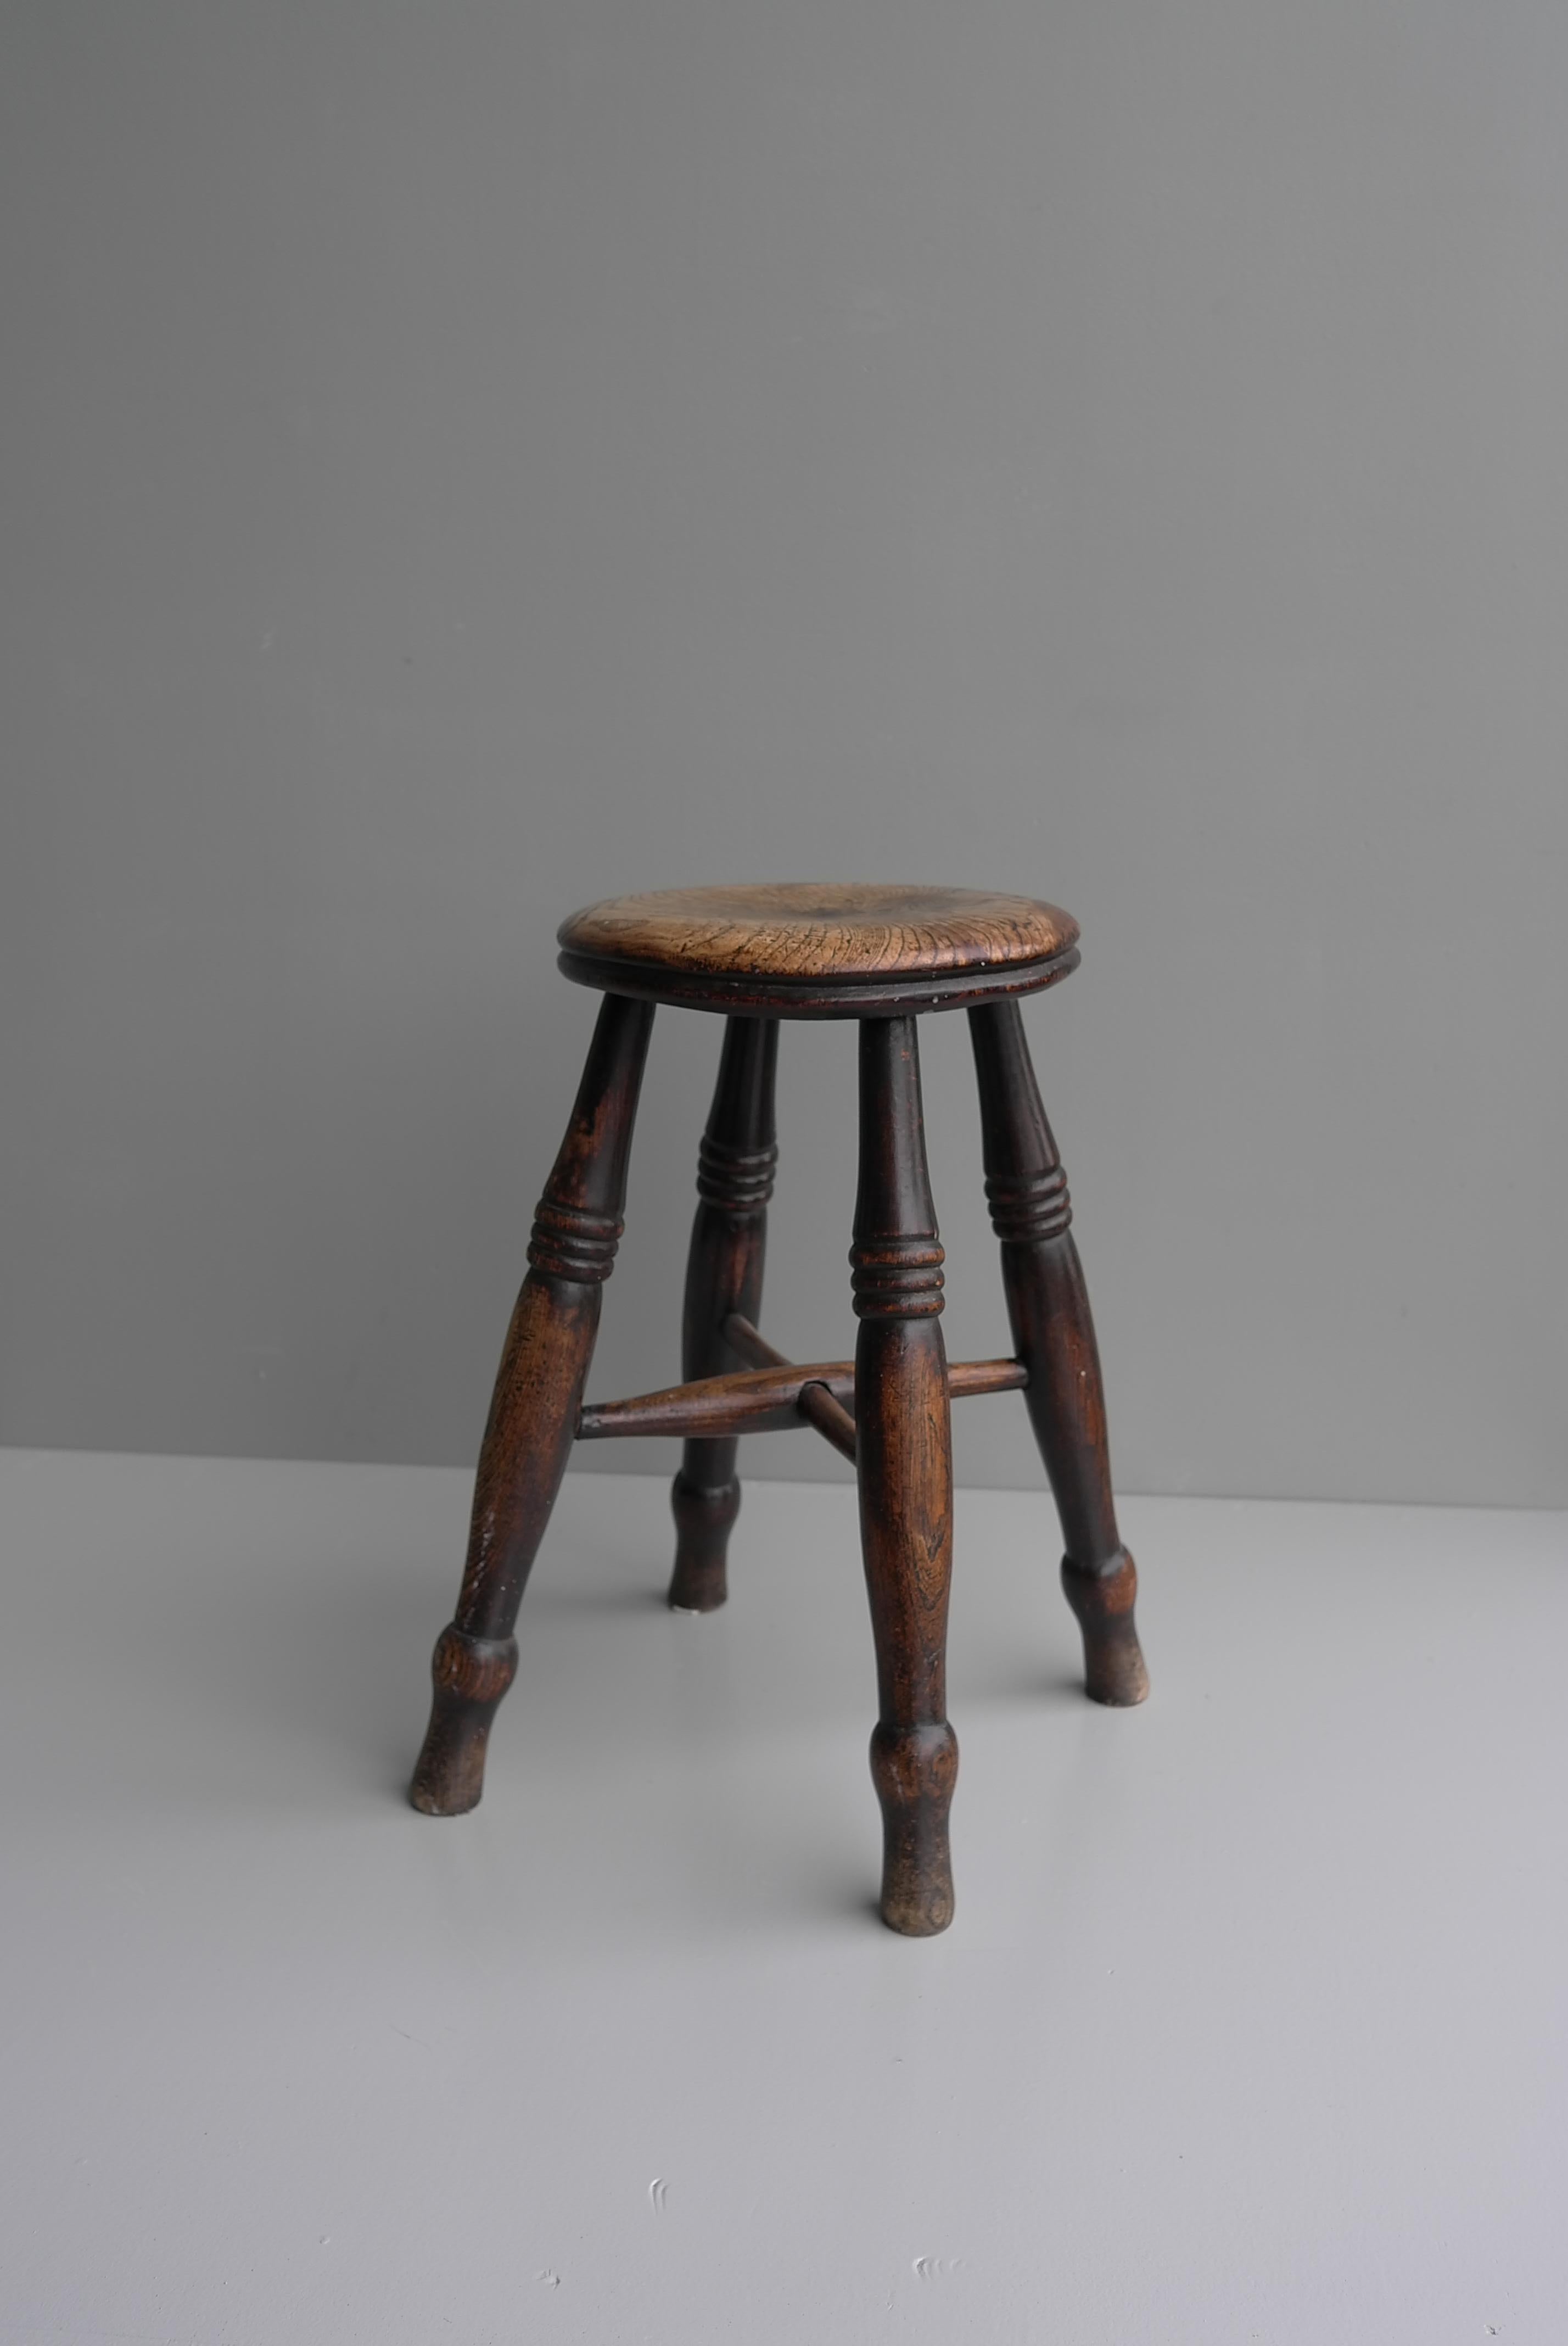 Windsor stool in dark Wood with rich Patina, England 1920's

Measures: Height 52cm, Width 34, Depth 34, Diameter seat 31 cm.